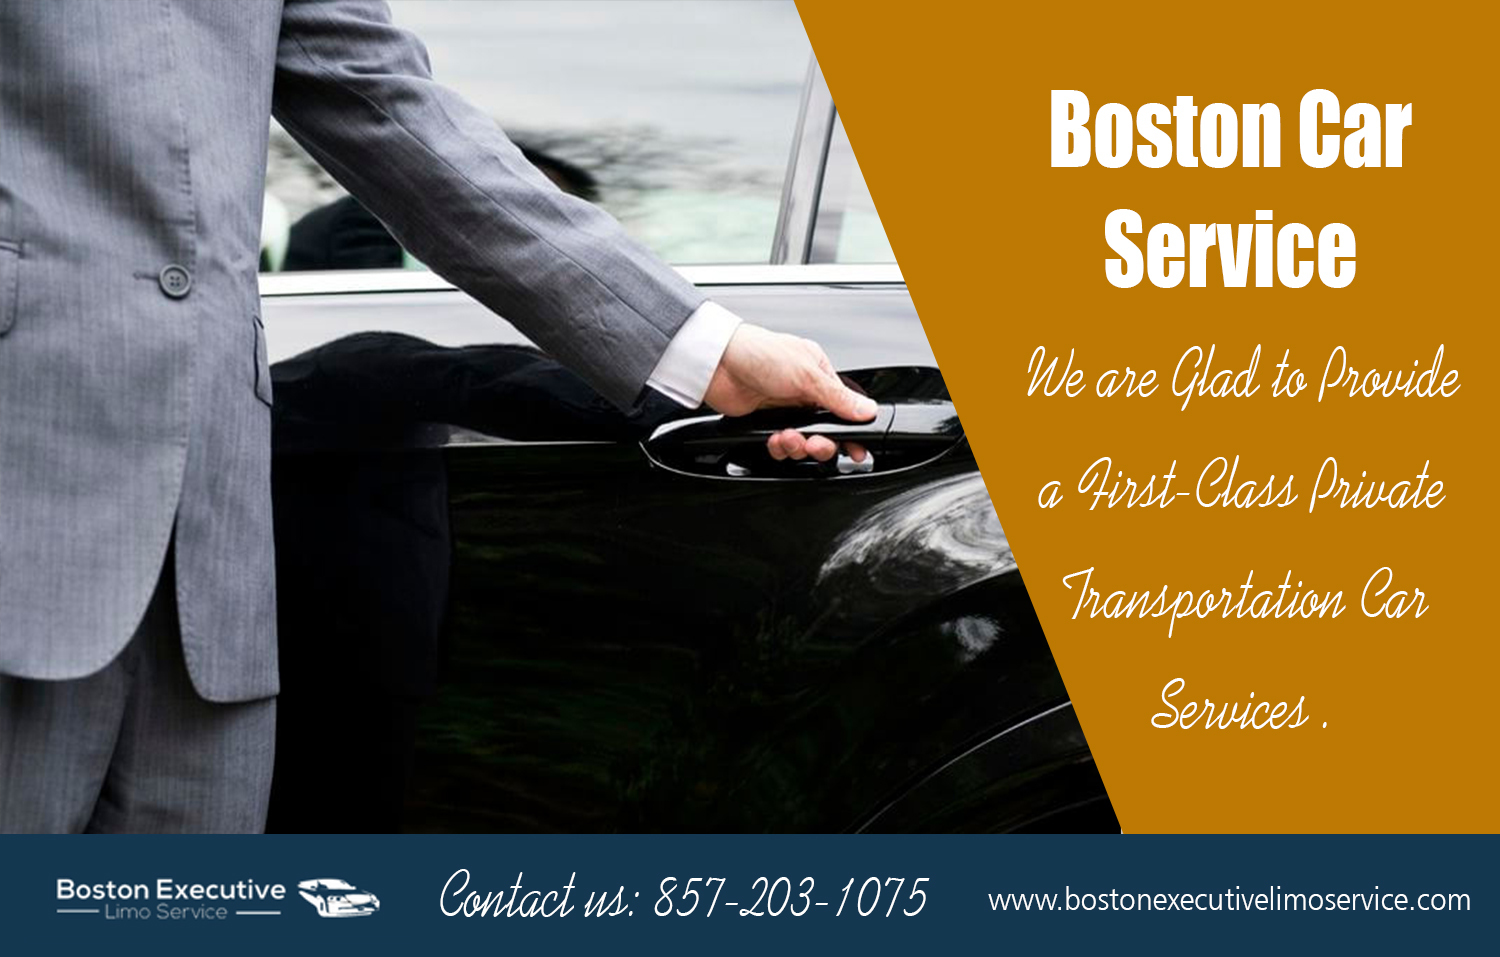 Car Services  Boston | 857-203-1075 | bostonexecutivelimoservice.com